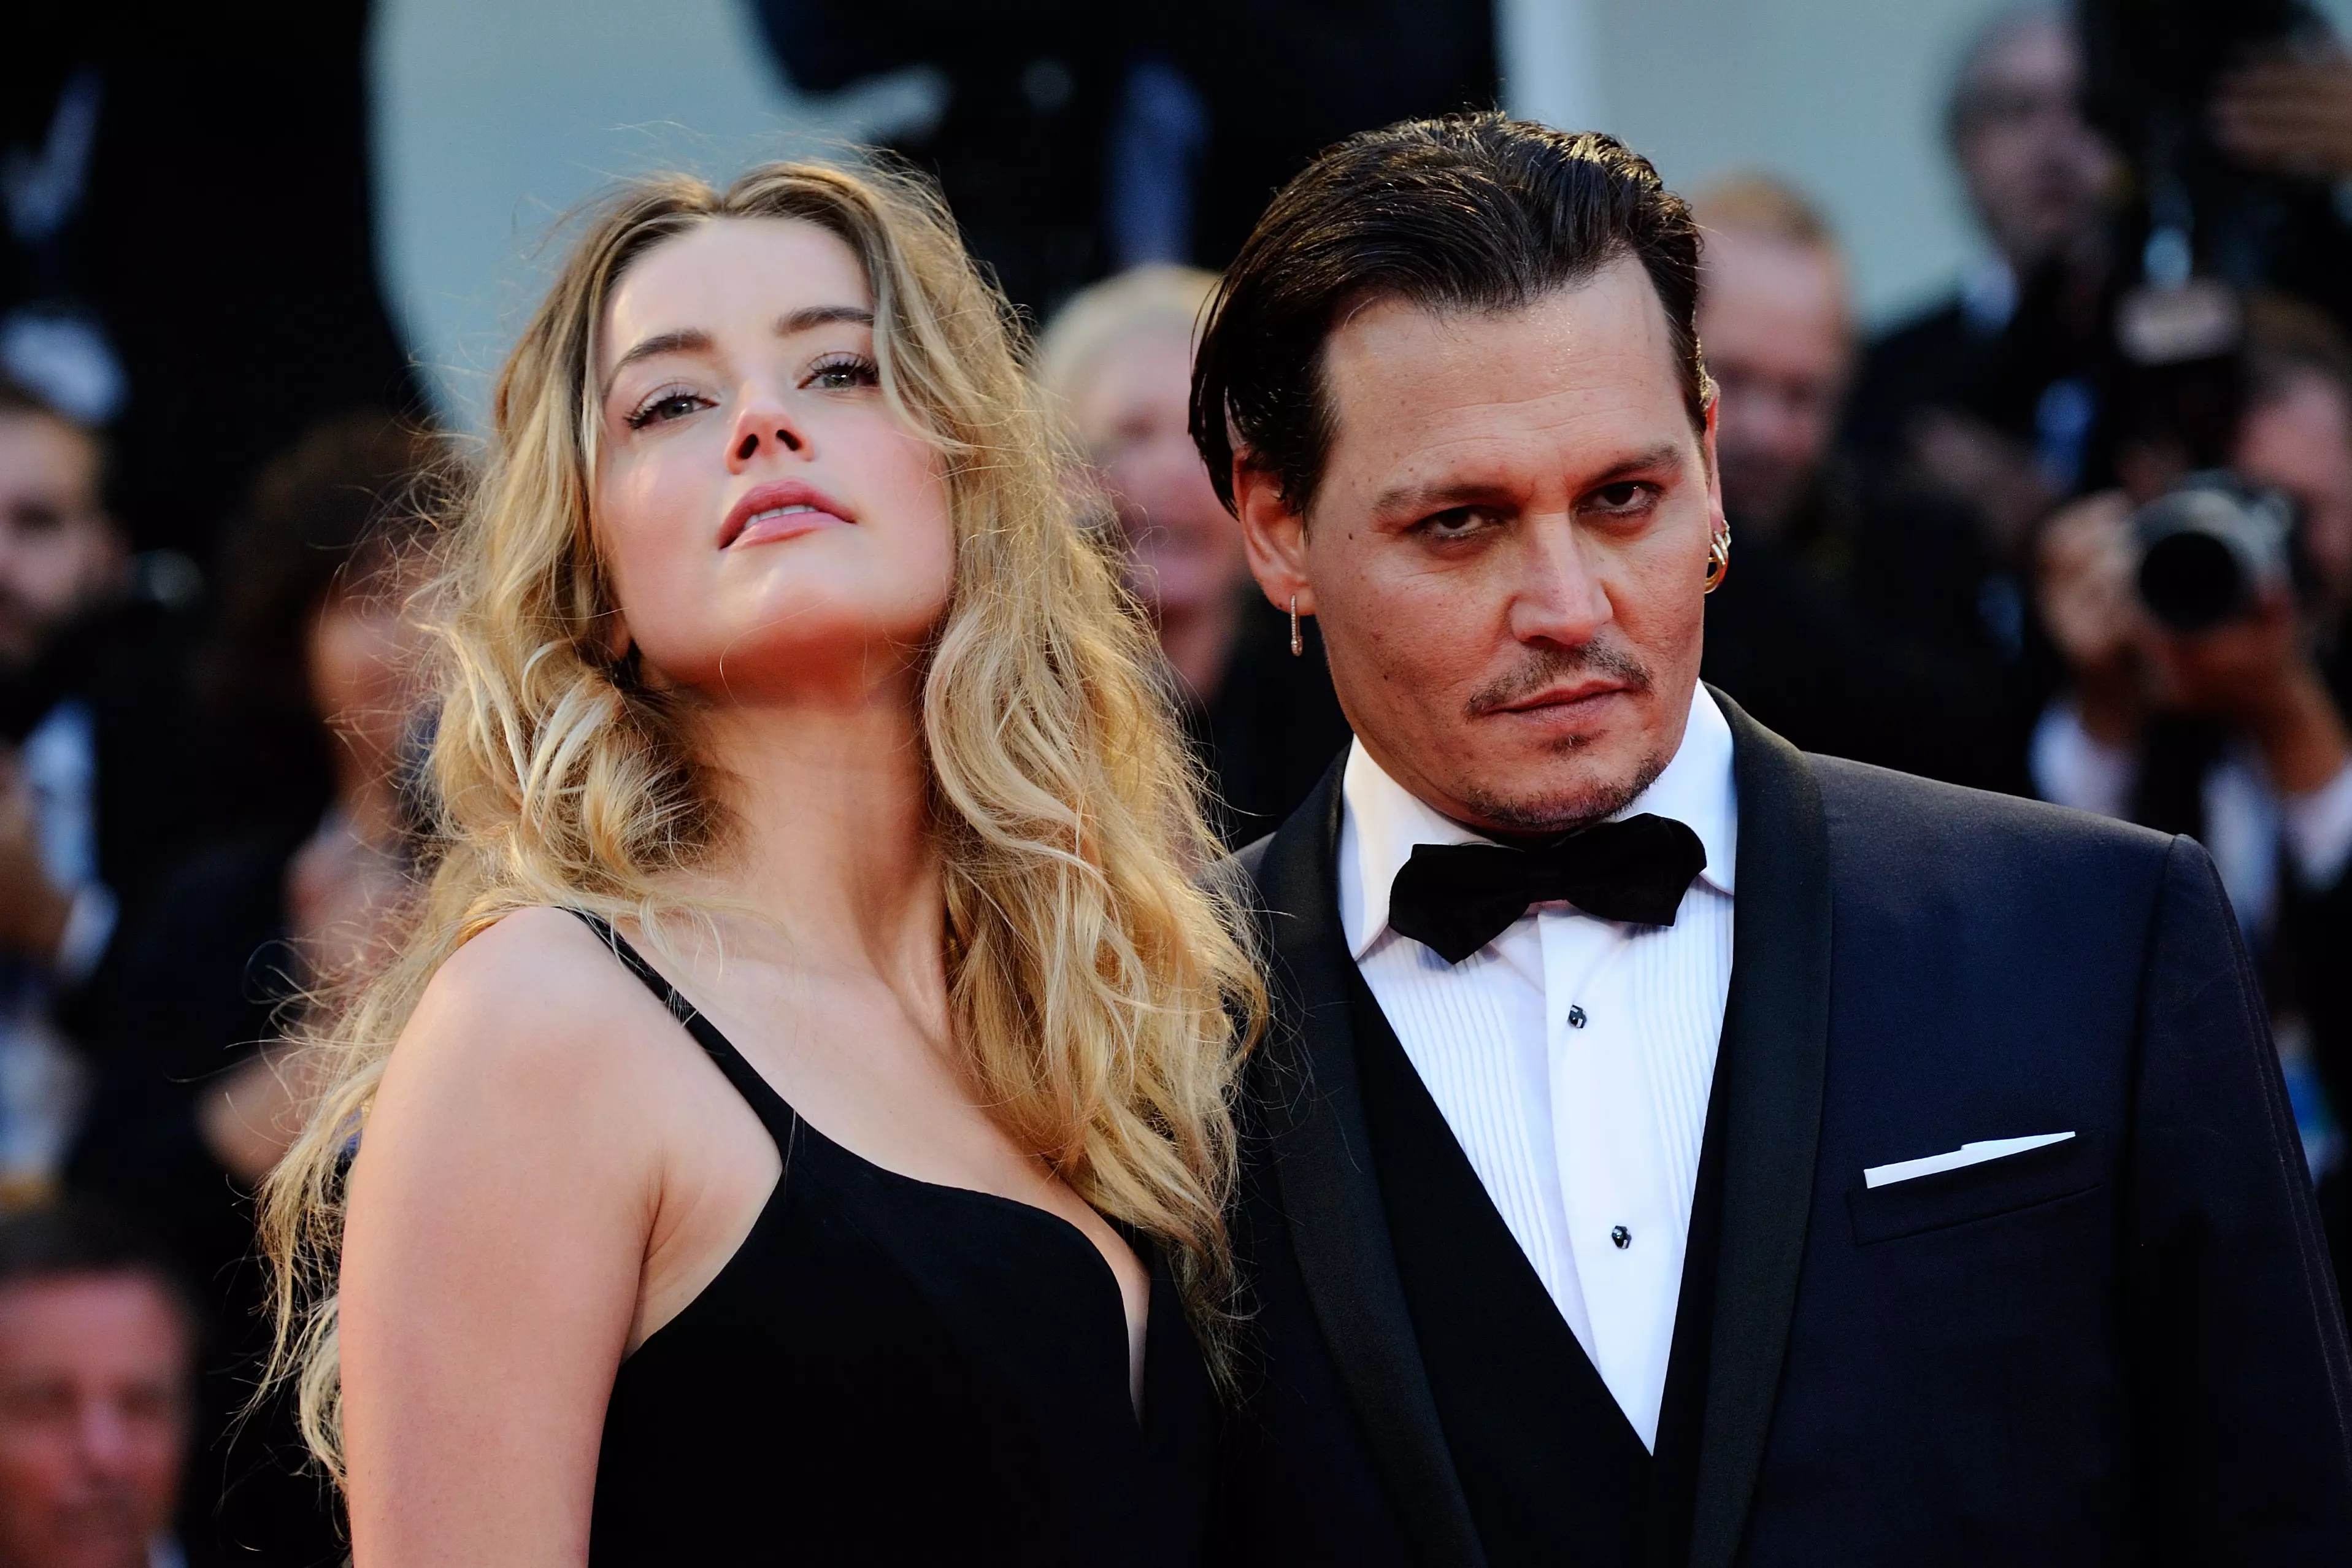 Depp and Heard divorced in 2017.